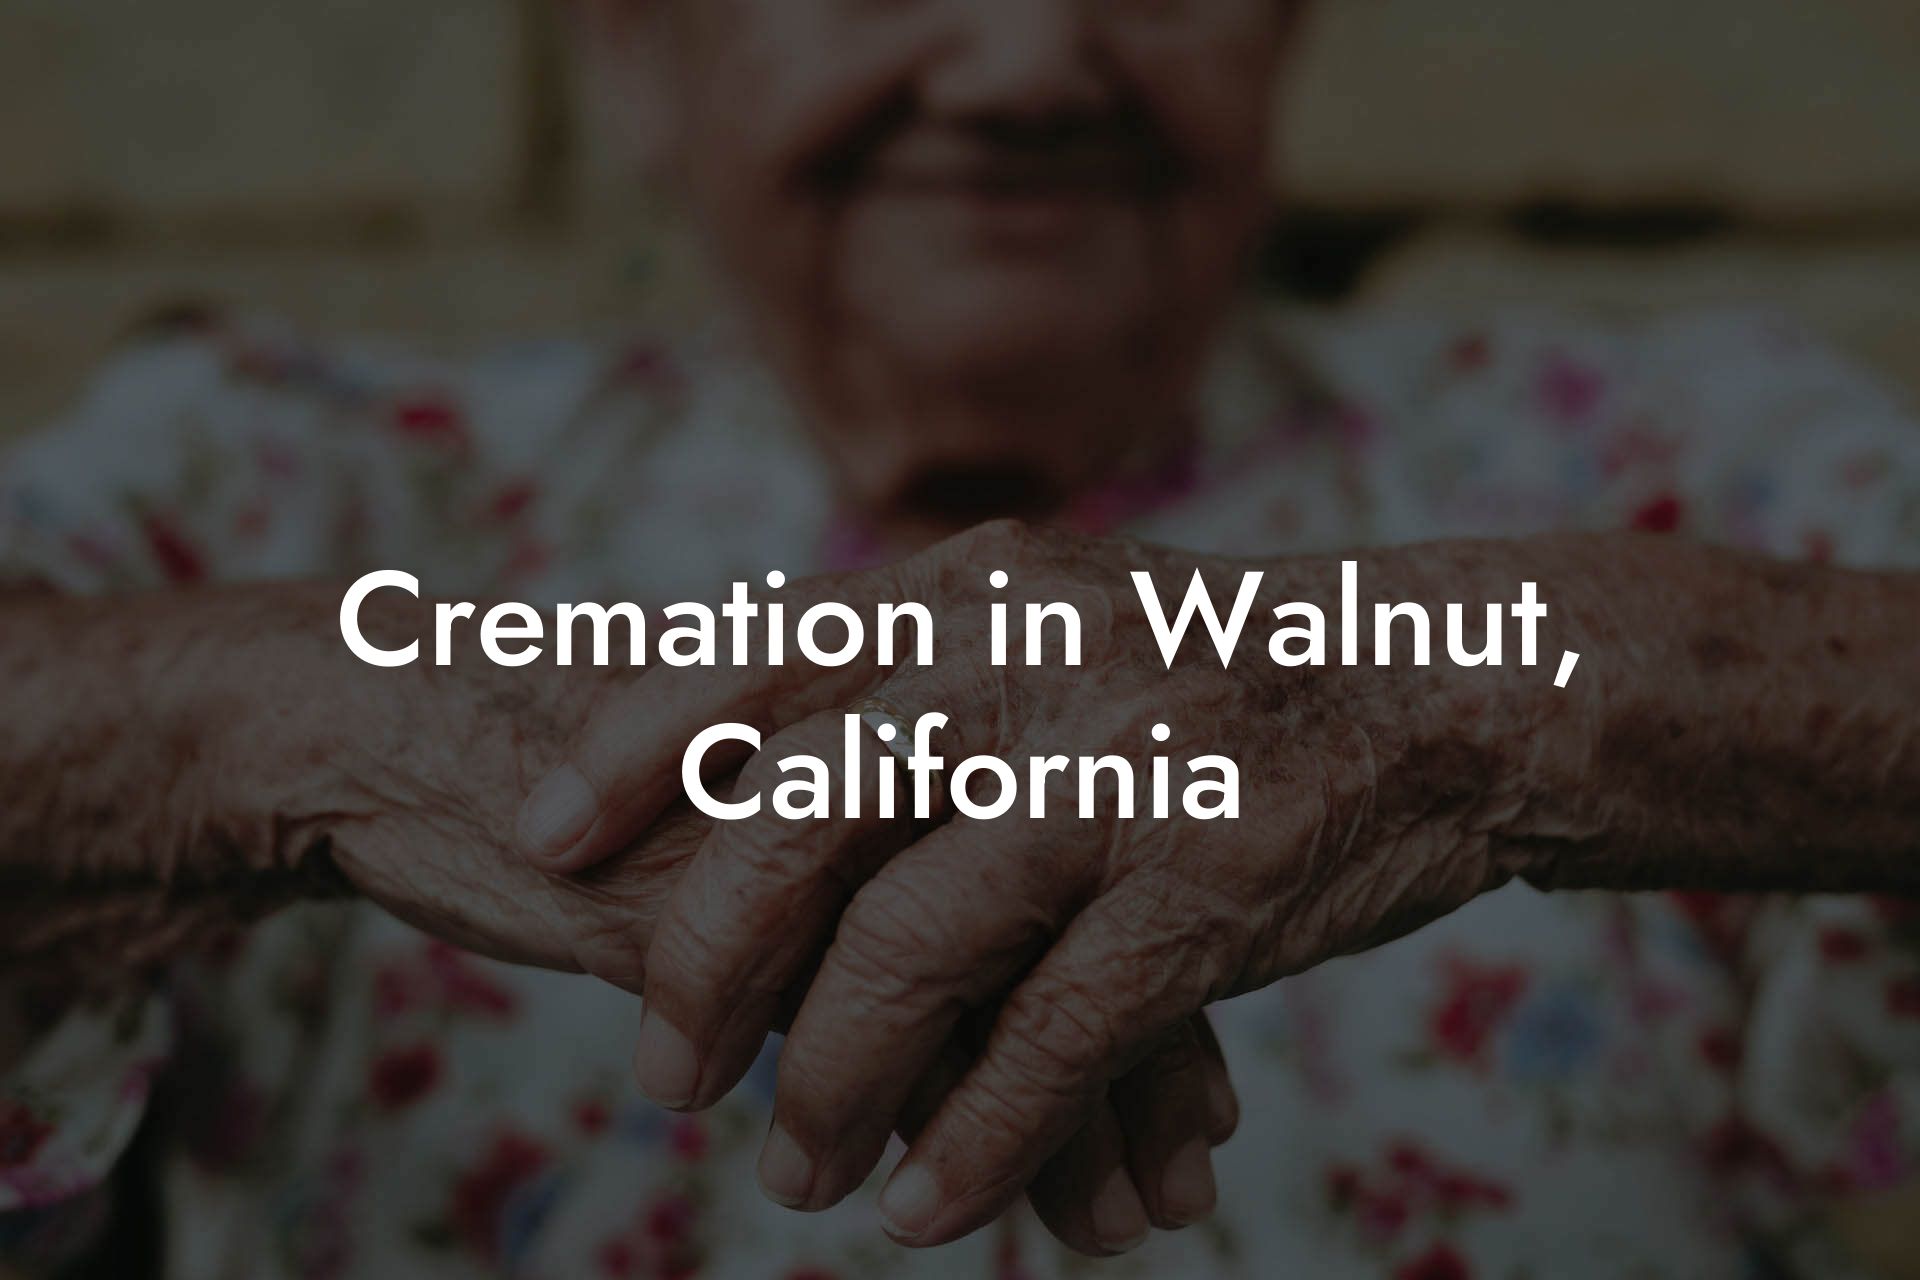 Cremation in Walnut, California